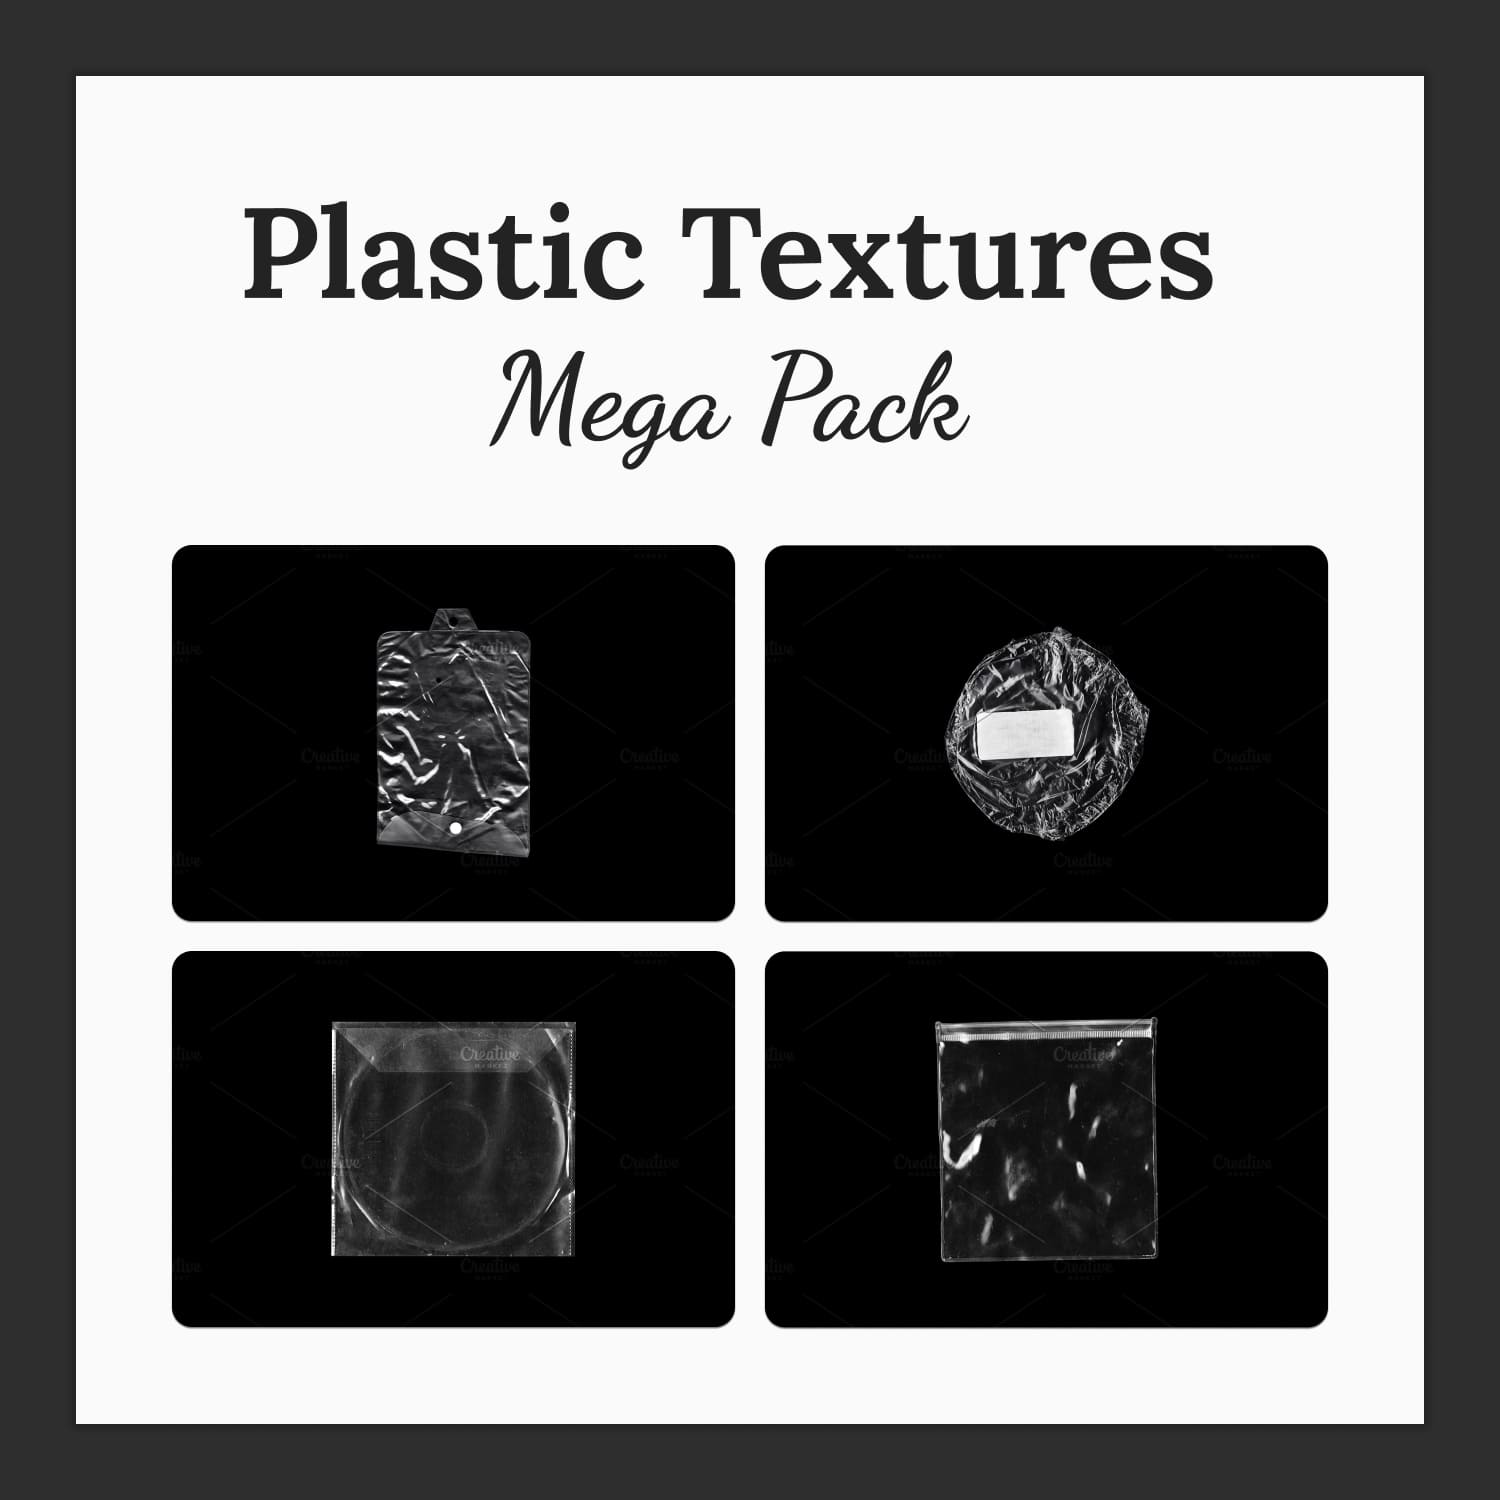 Plastic textures mega pack - main image preview.